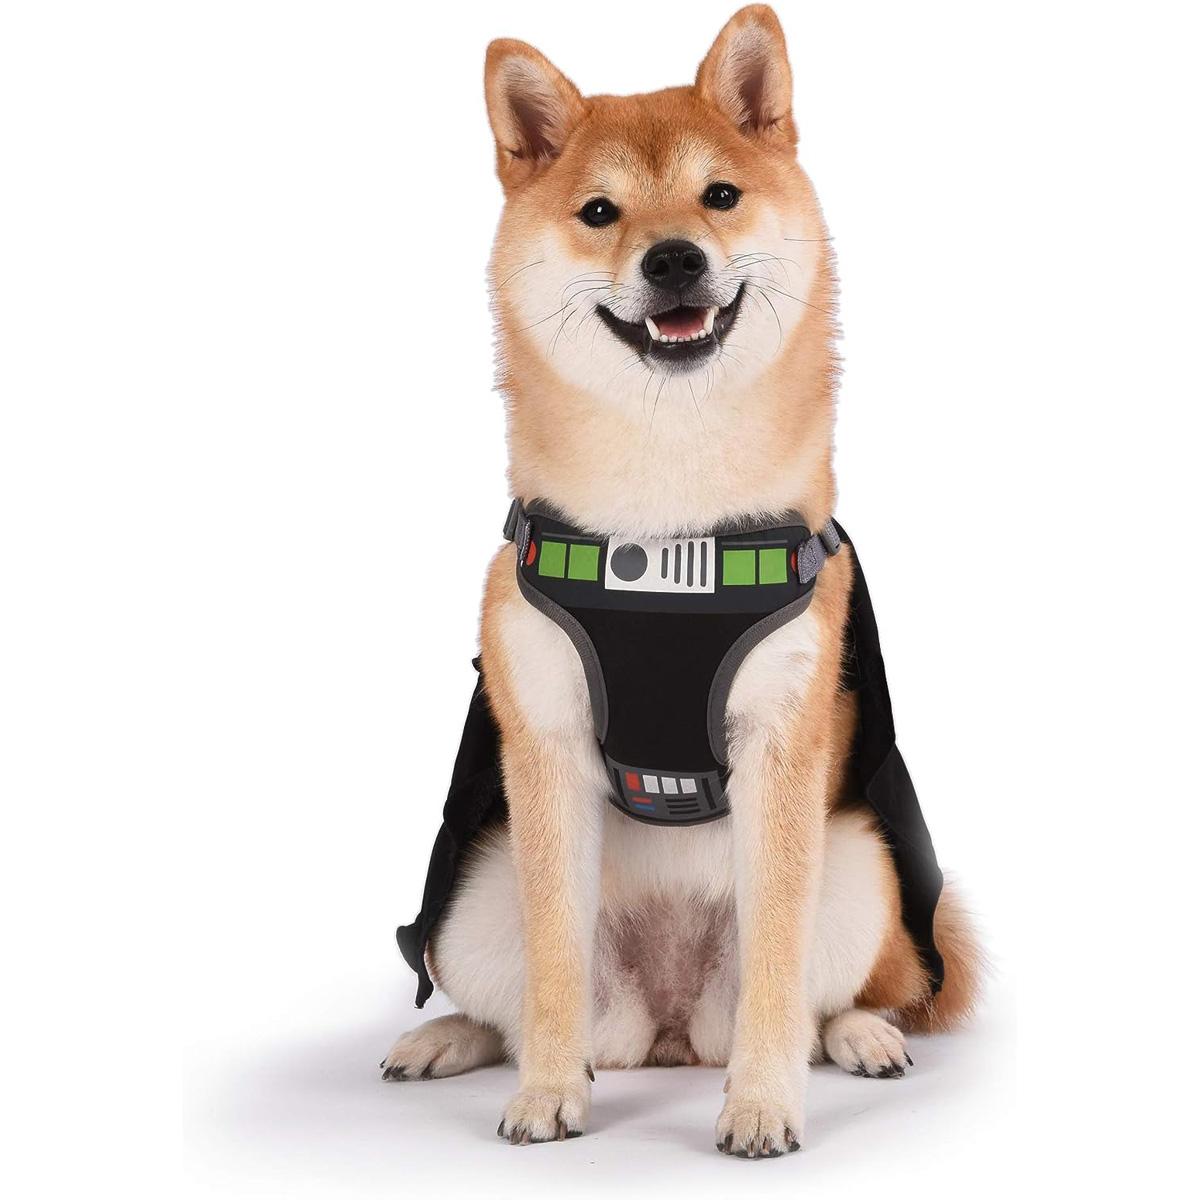 Star Wars Darth Vader Dog Harness for $8.63